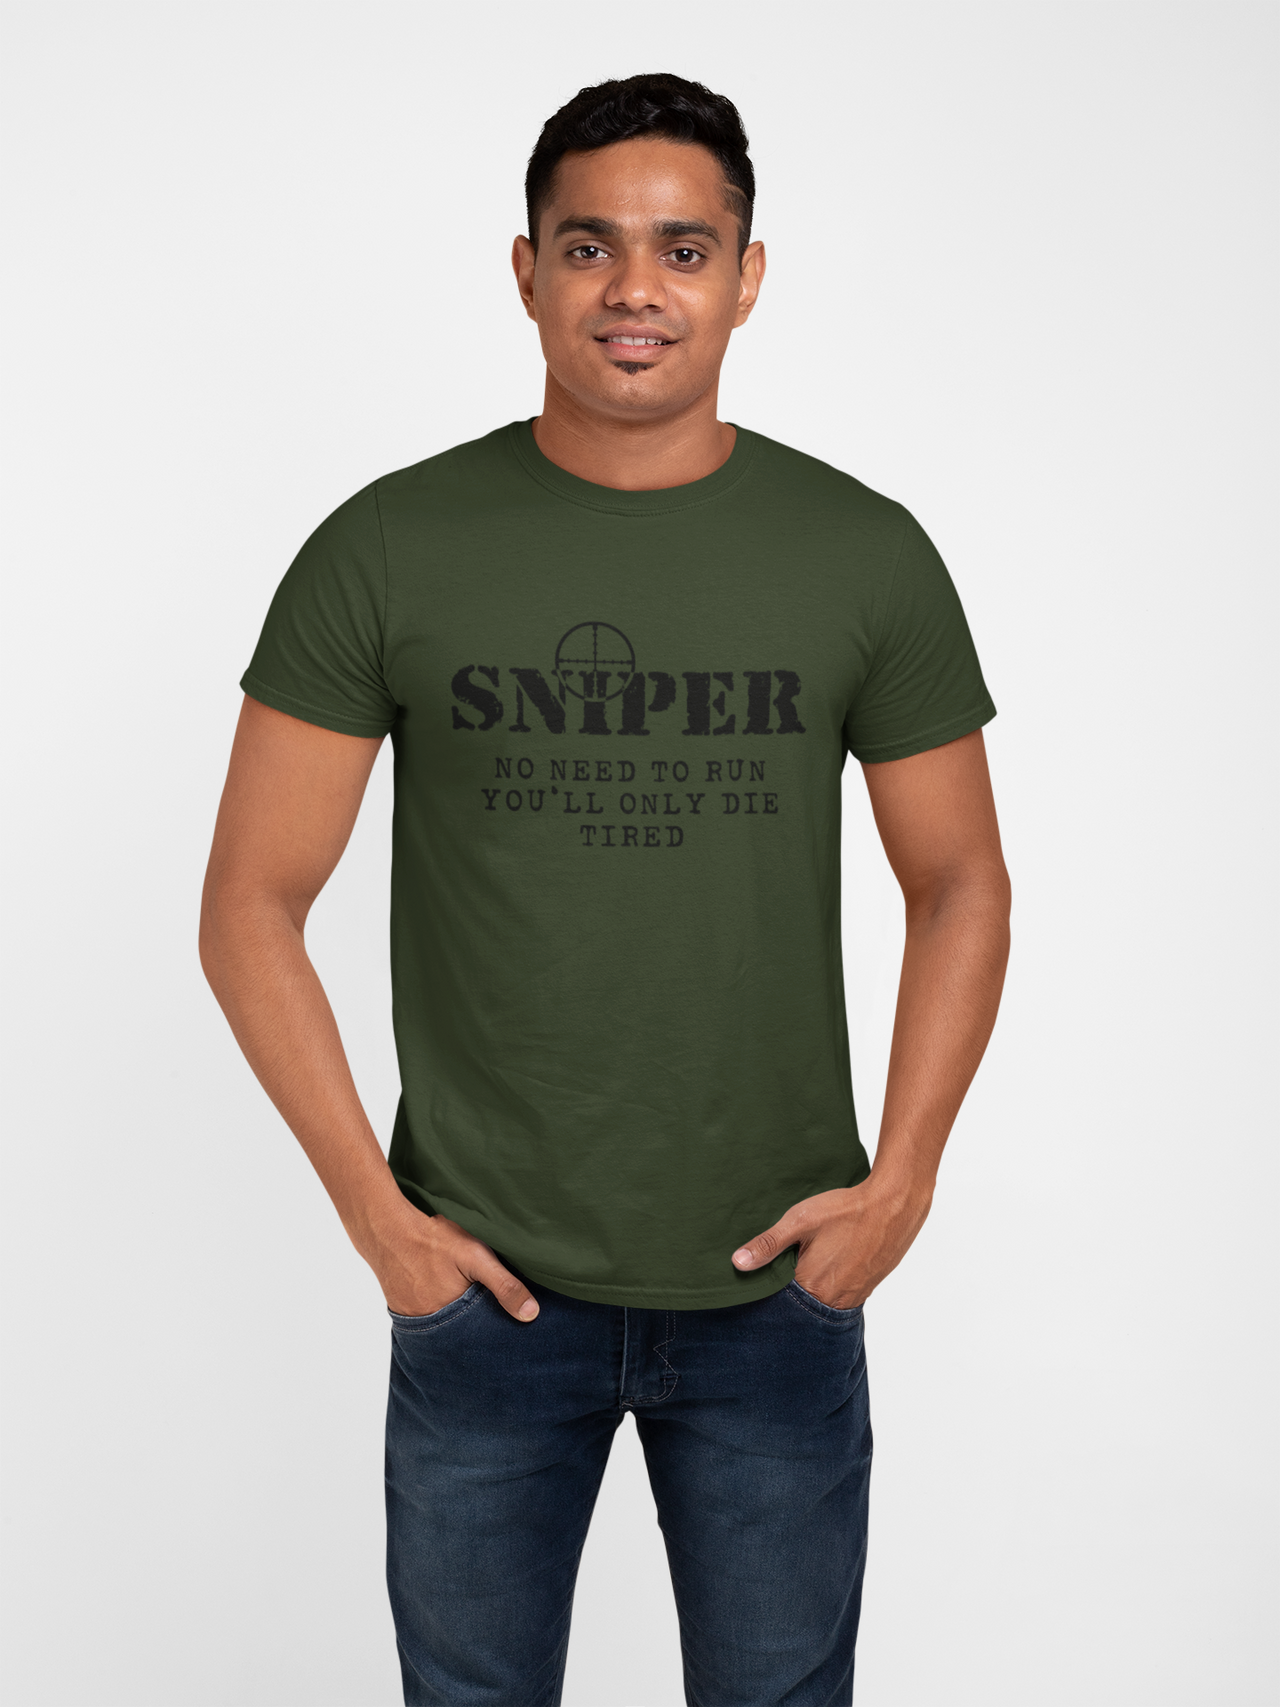 Sniper T-shirt - Sniper, No Need To Run..... (Men)